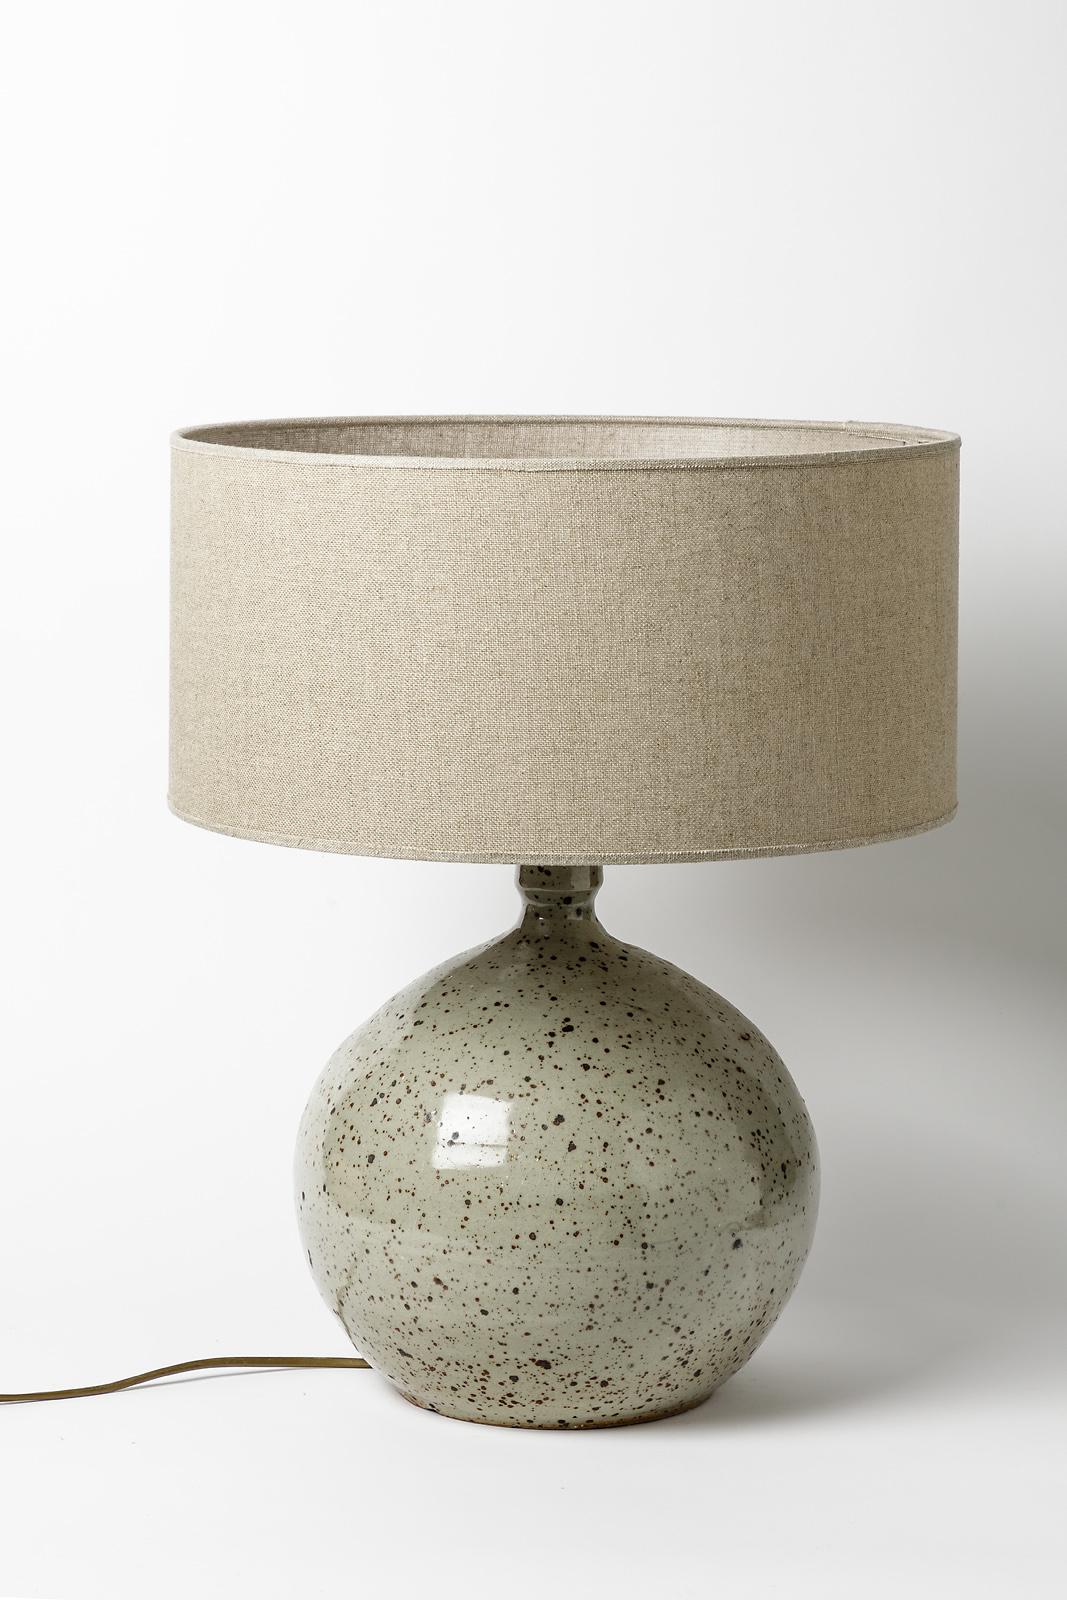 Large 20th Century Grey Stoneware Ceramic Table Lamp by Baudart 1